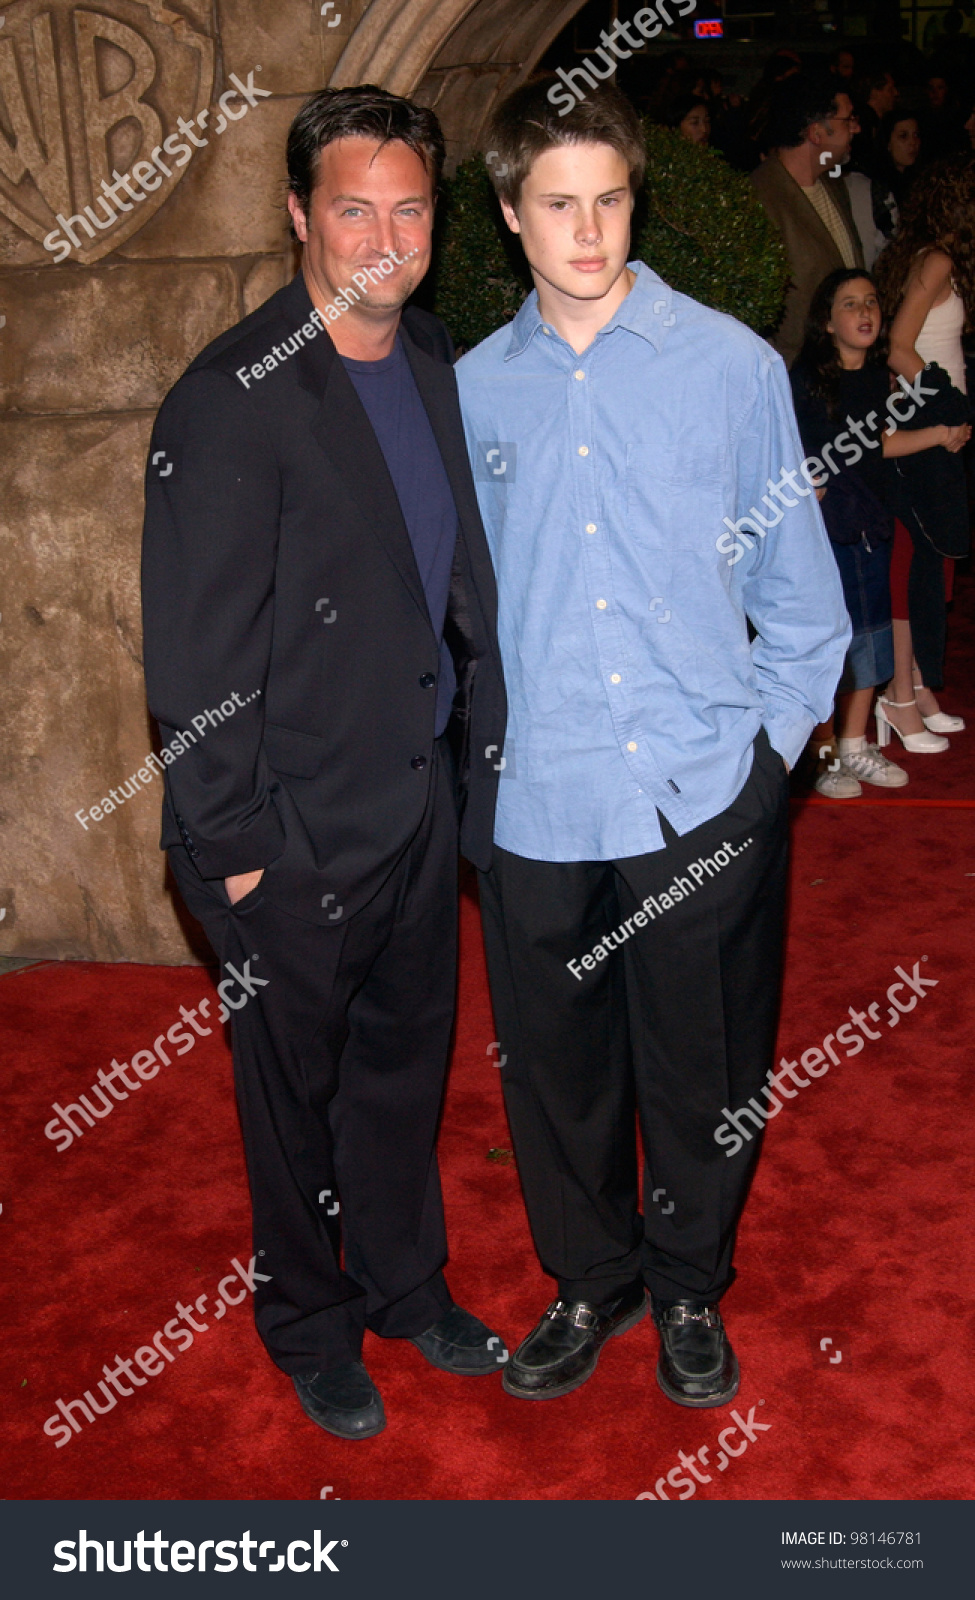 Actor Matthew Perry Left Brother Will Fotka: 98146781 - Shutterstock